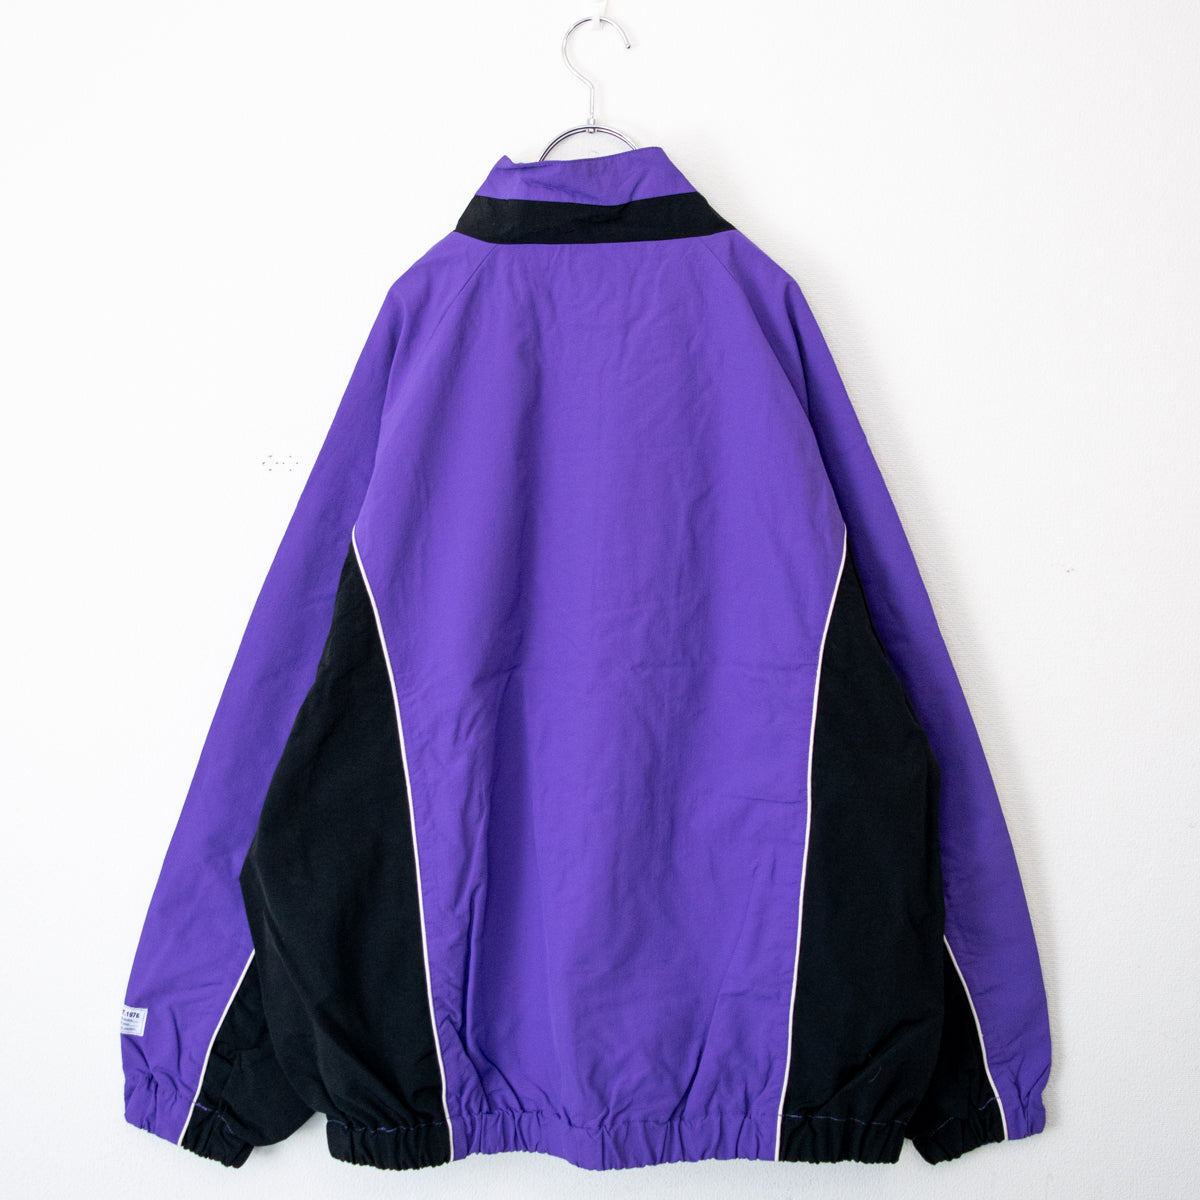 VISION STREET WEAR Raglan Track Jacket in Violet Purple